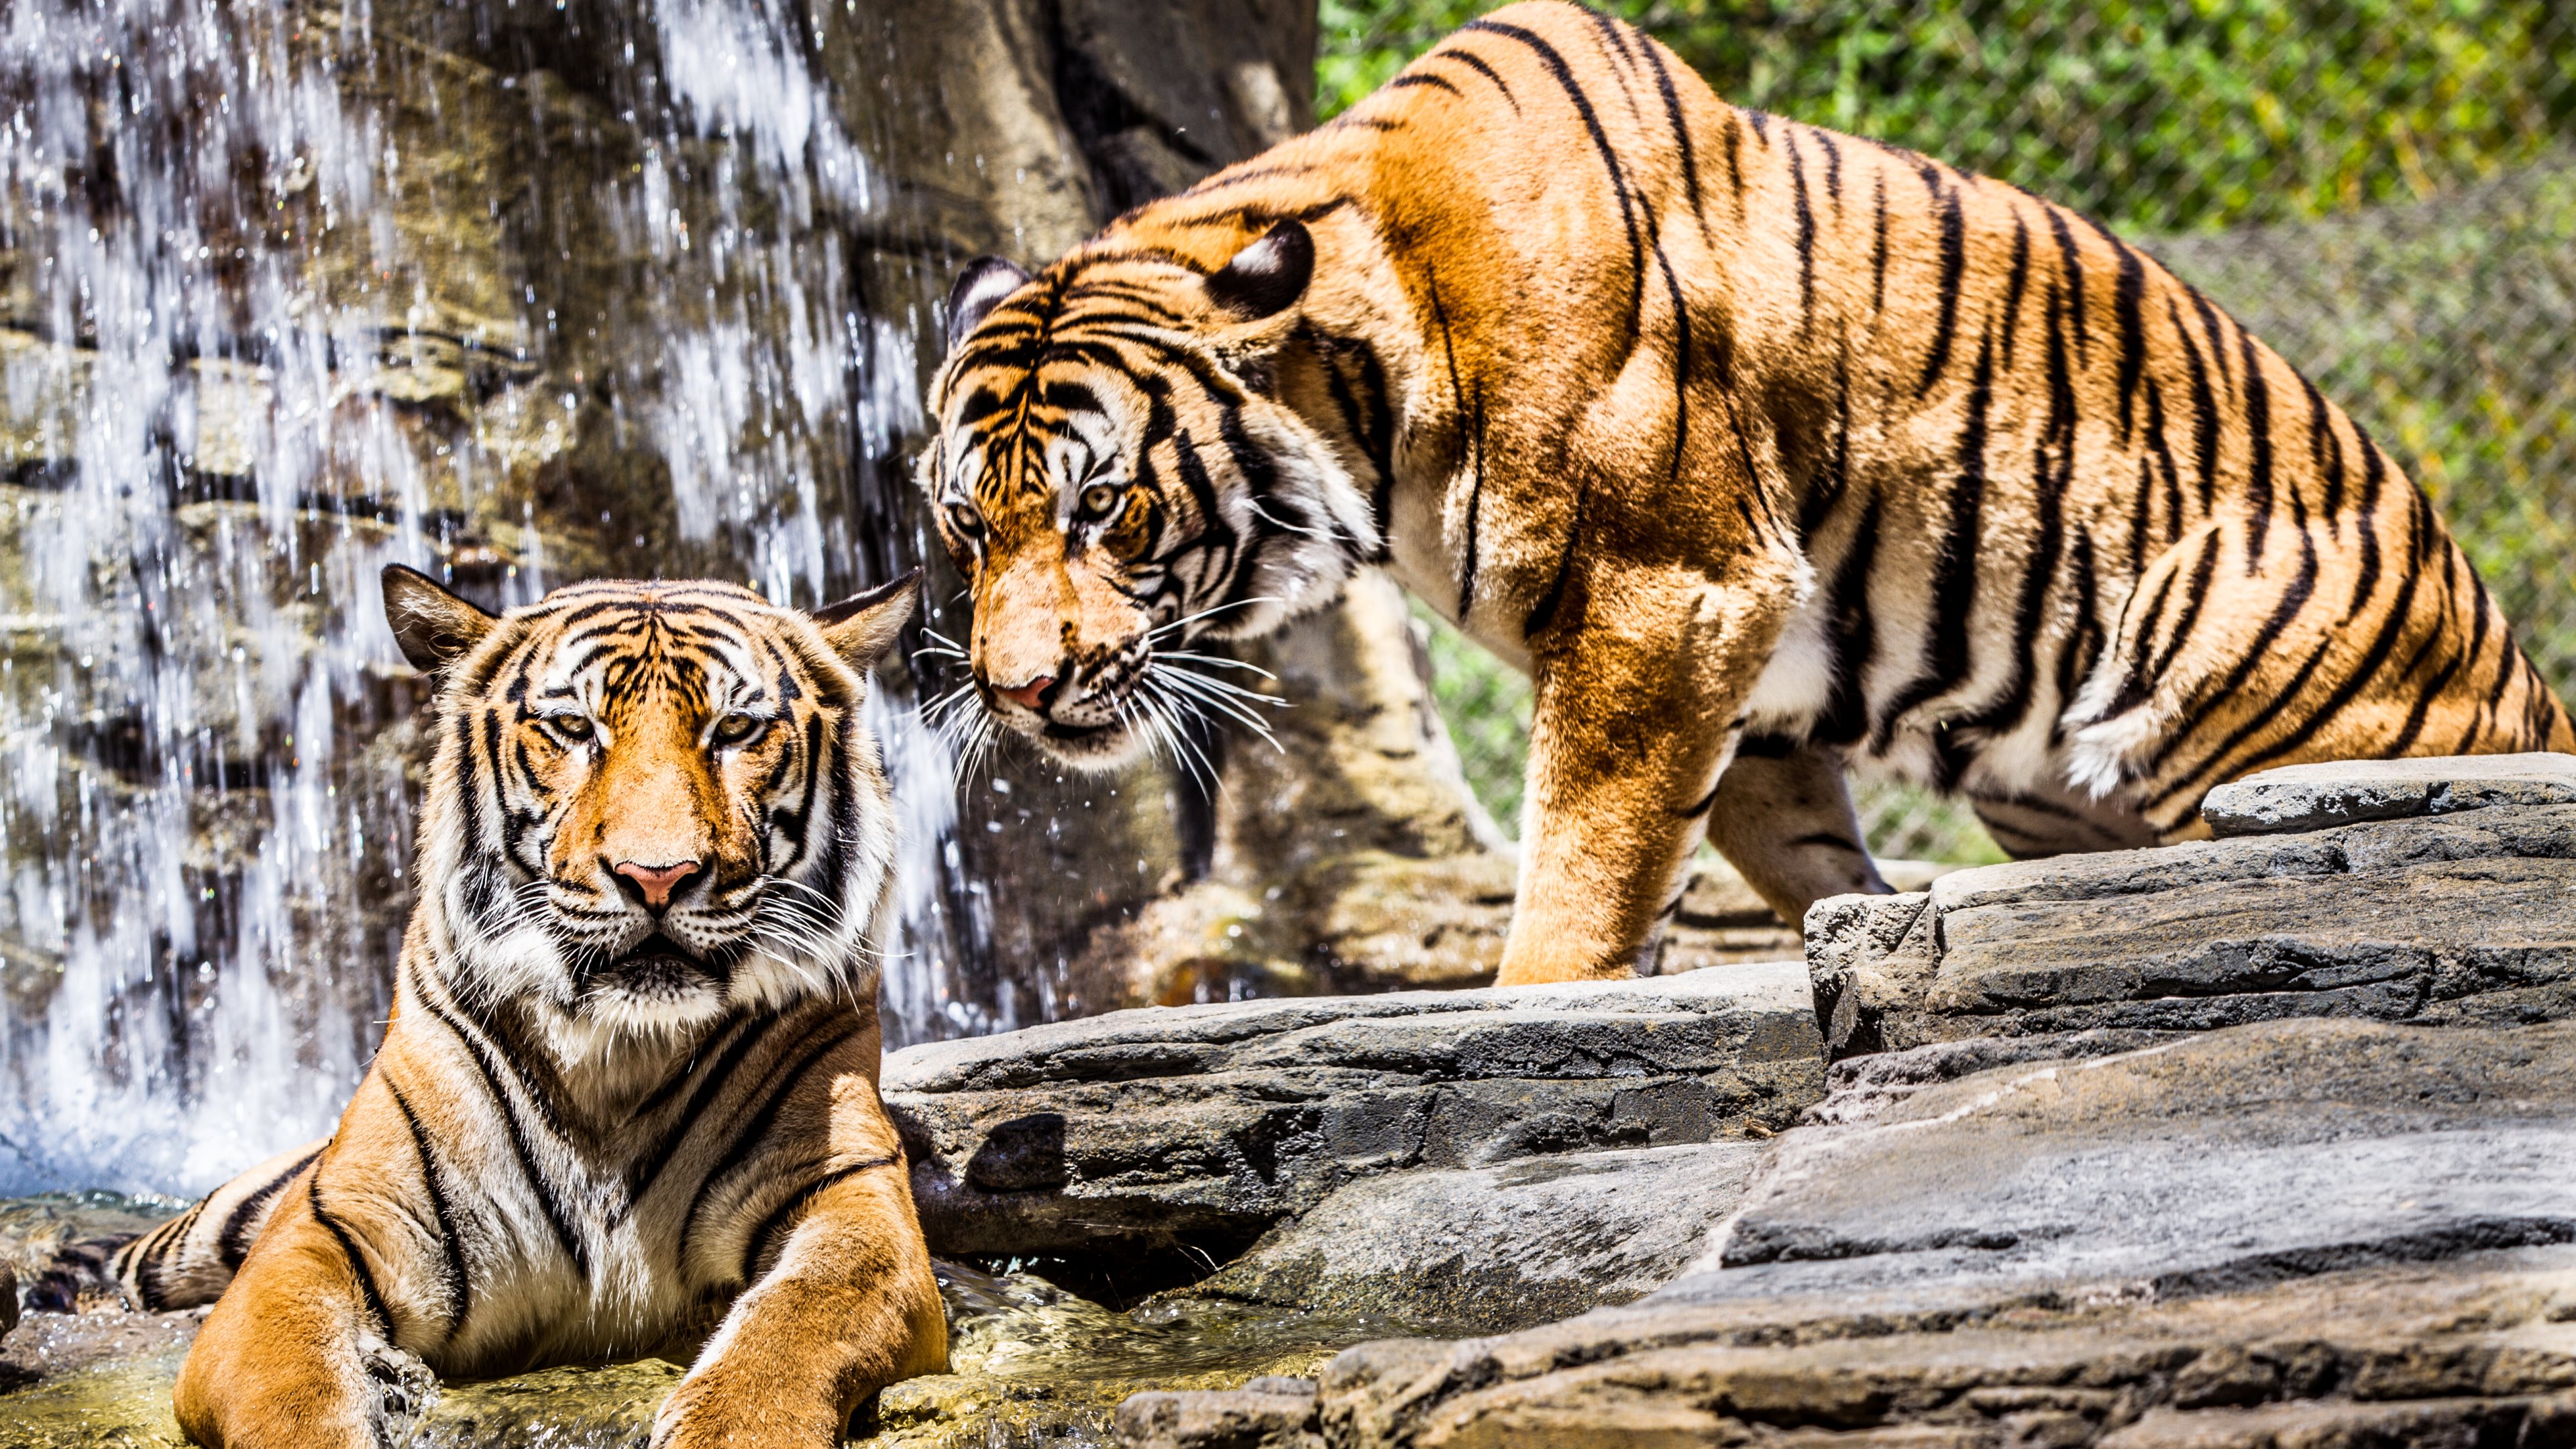 Tiger 4k Ultra HD Wallpaper | Background Image | 3840x2160